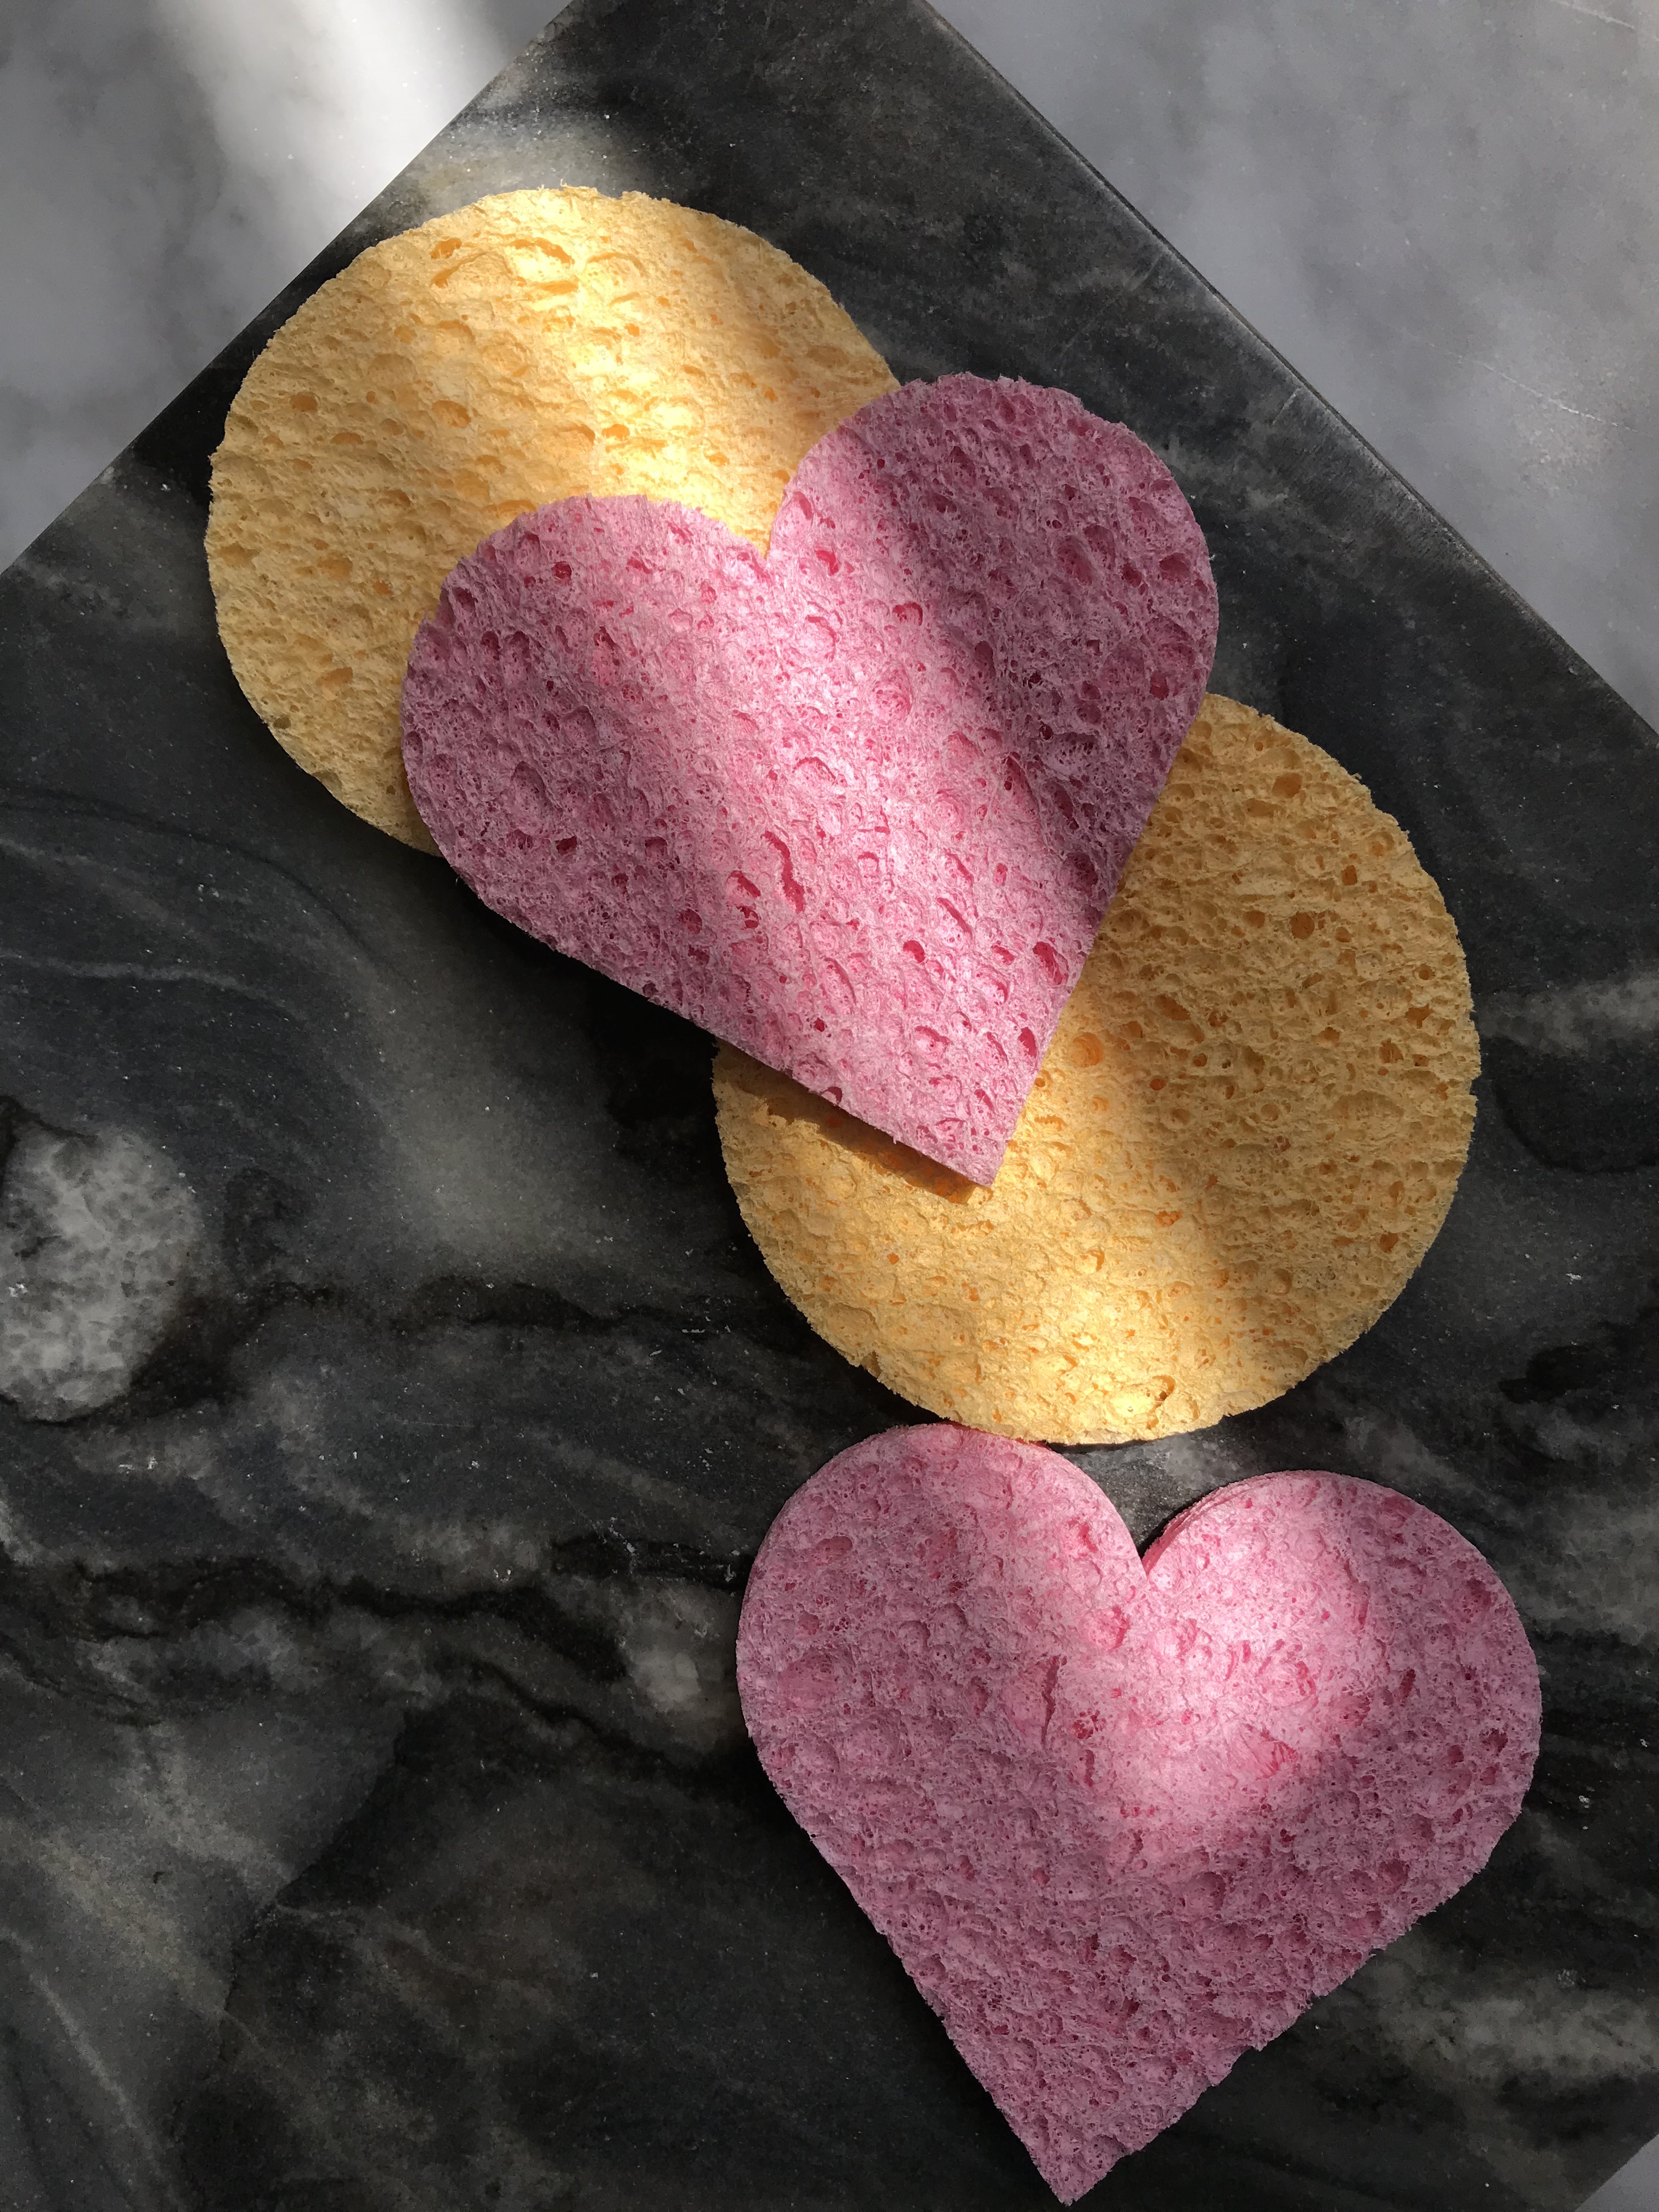 Heart-shaped Cellulose Sponge, Pink